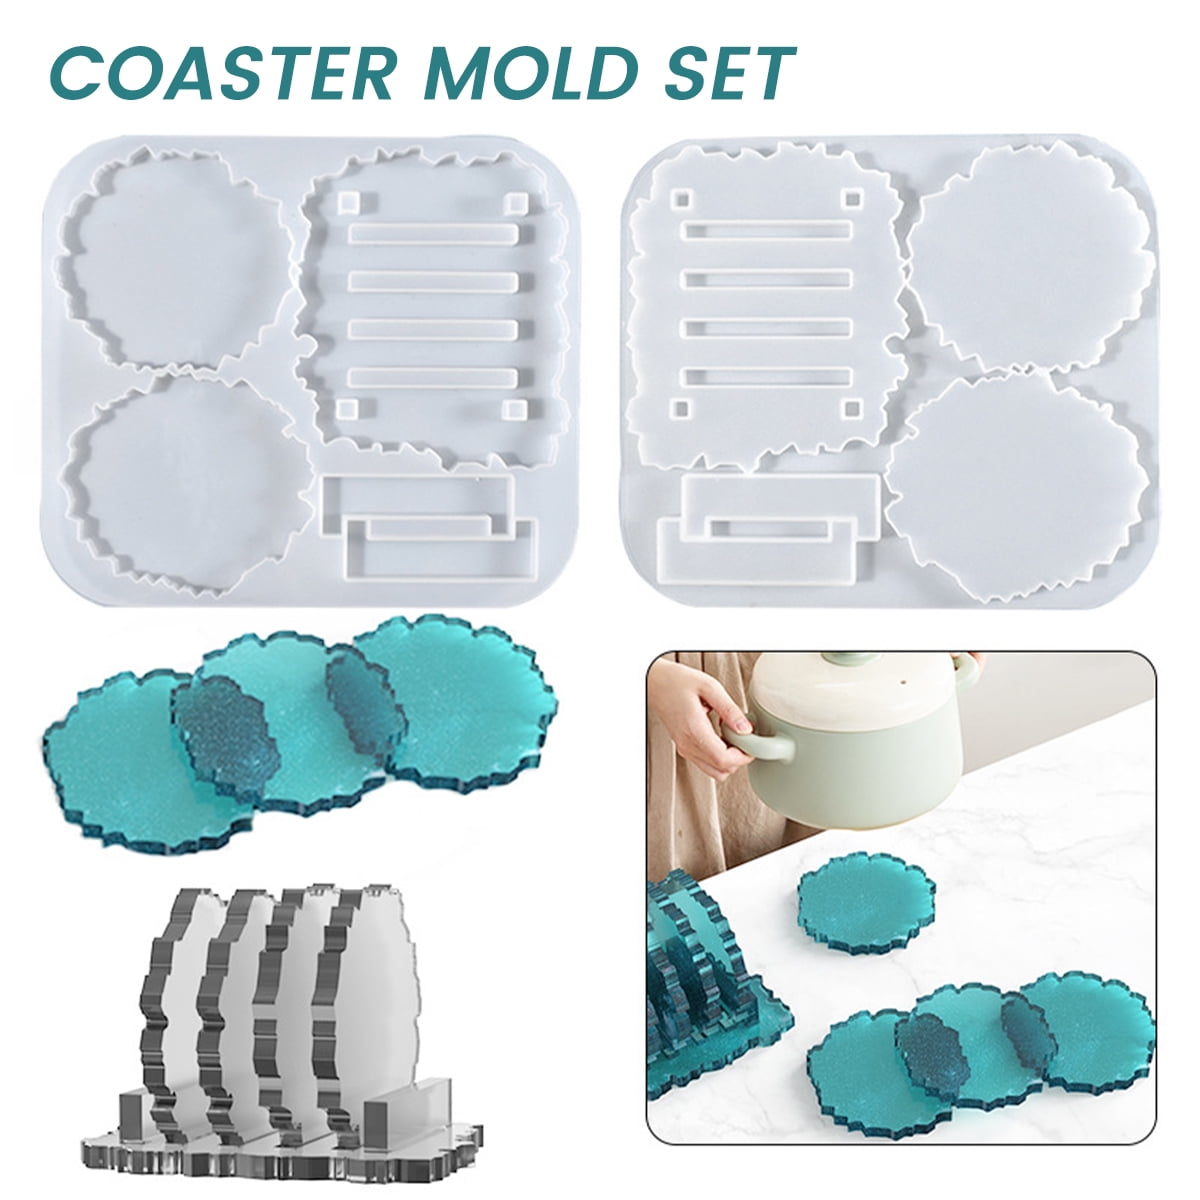 Coaster and holder resin mould set.